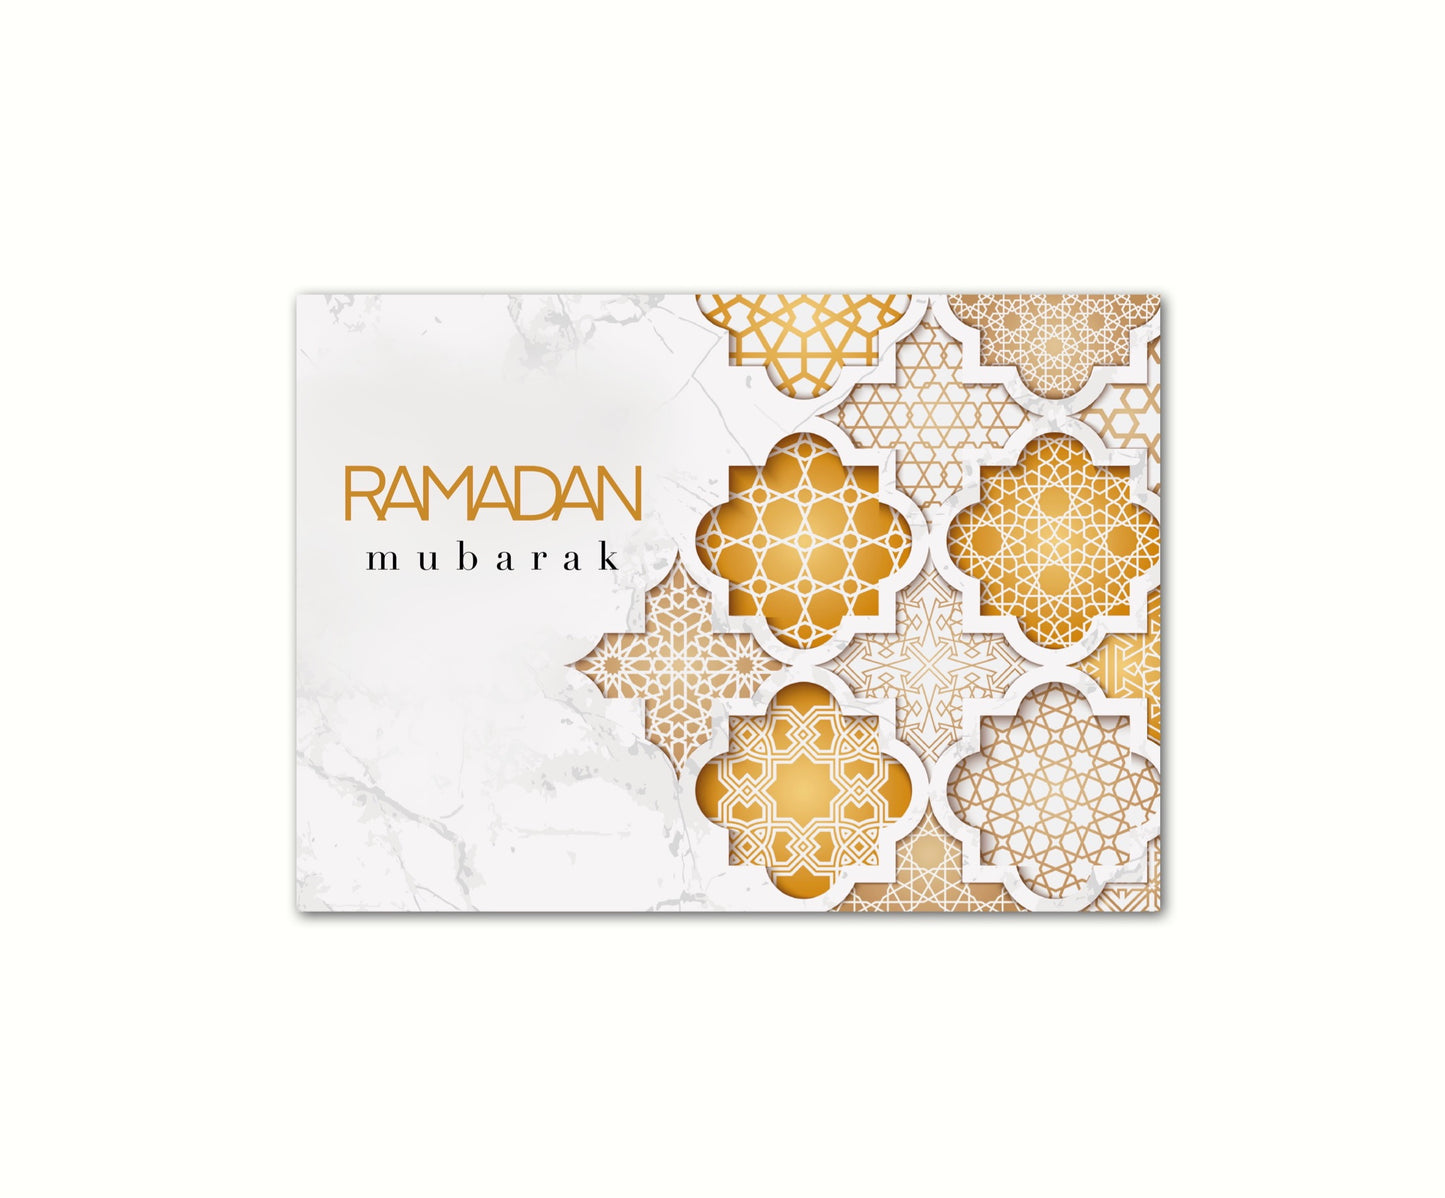 Ramadan Orient Karte